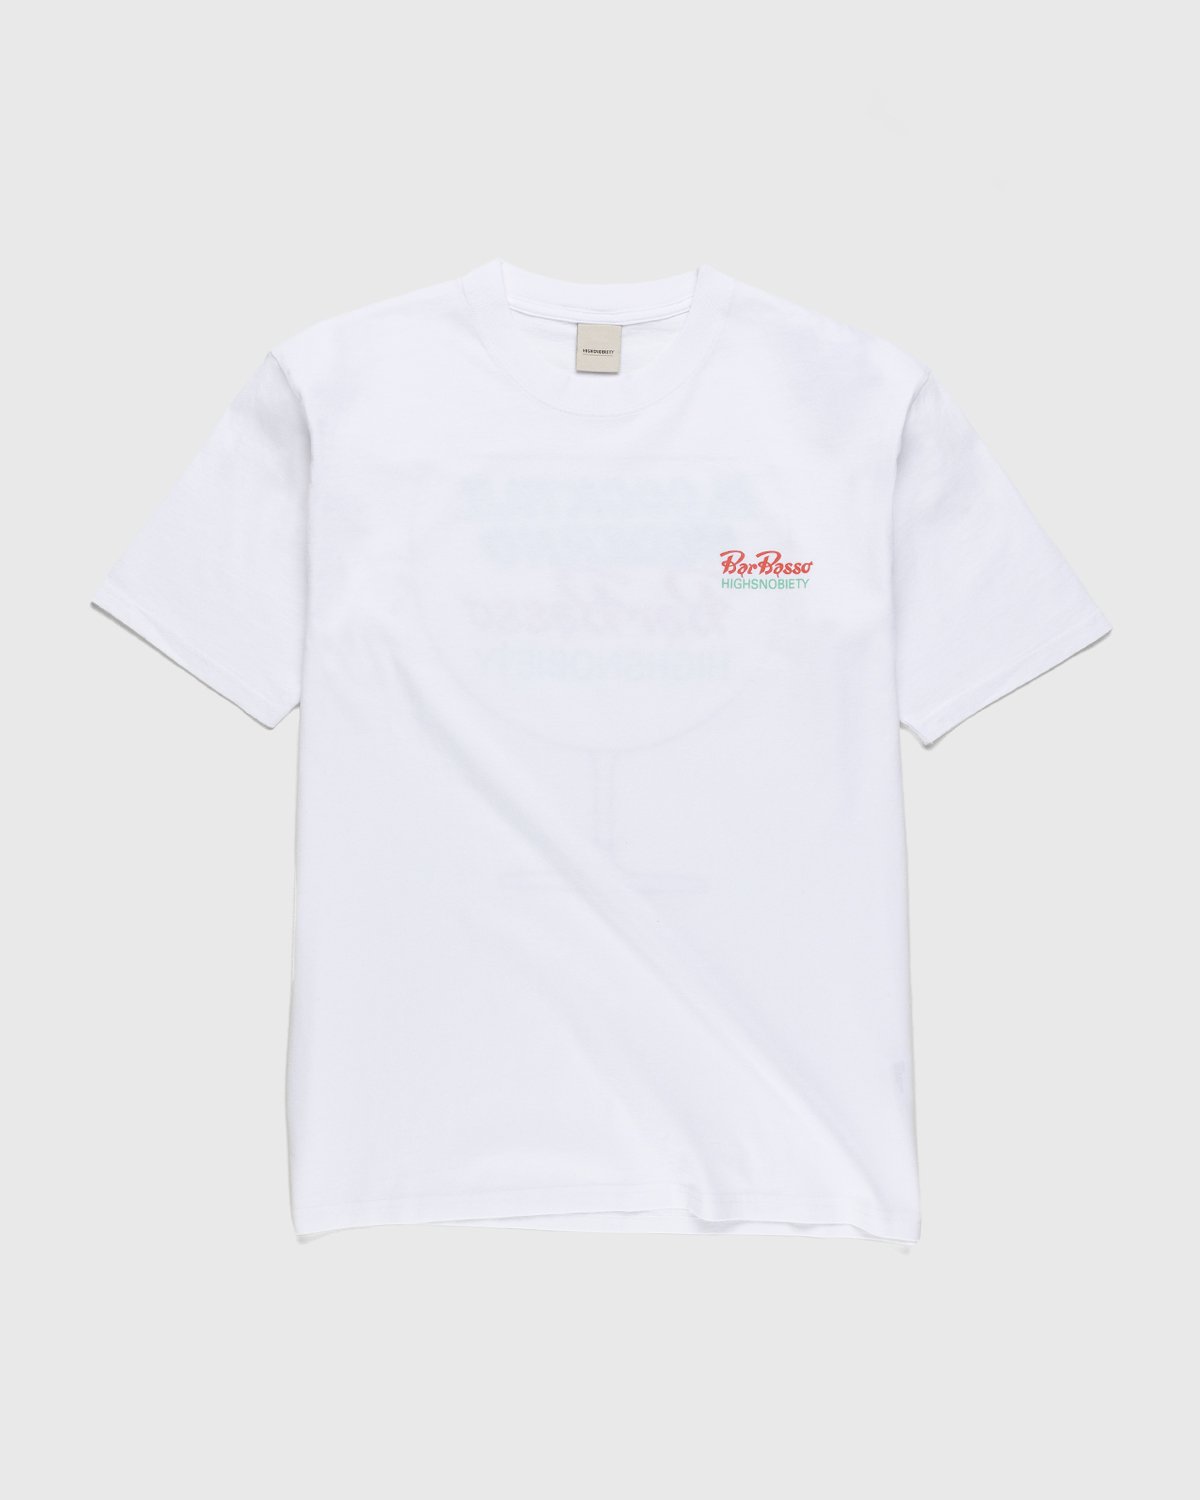 Bar Basso x Highsnobiety - Cocktail Glass T-Shirt White - Clothing - White - Image 2